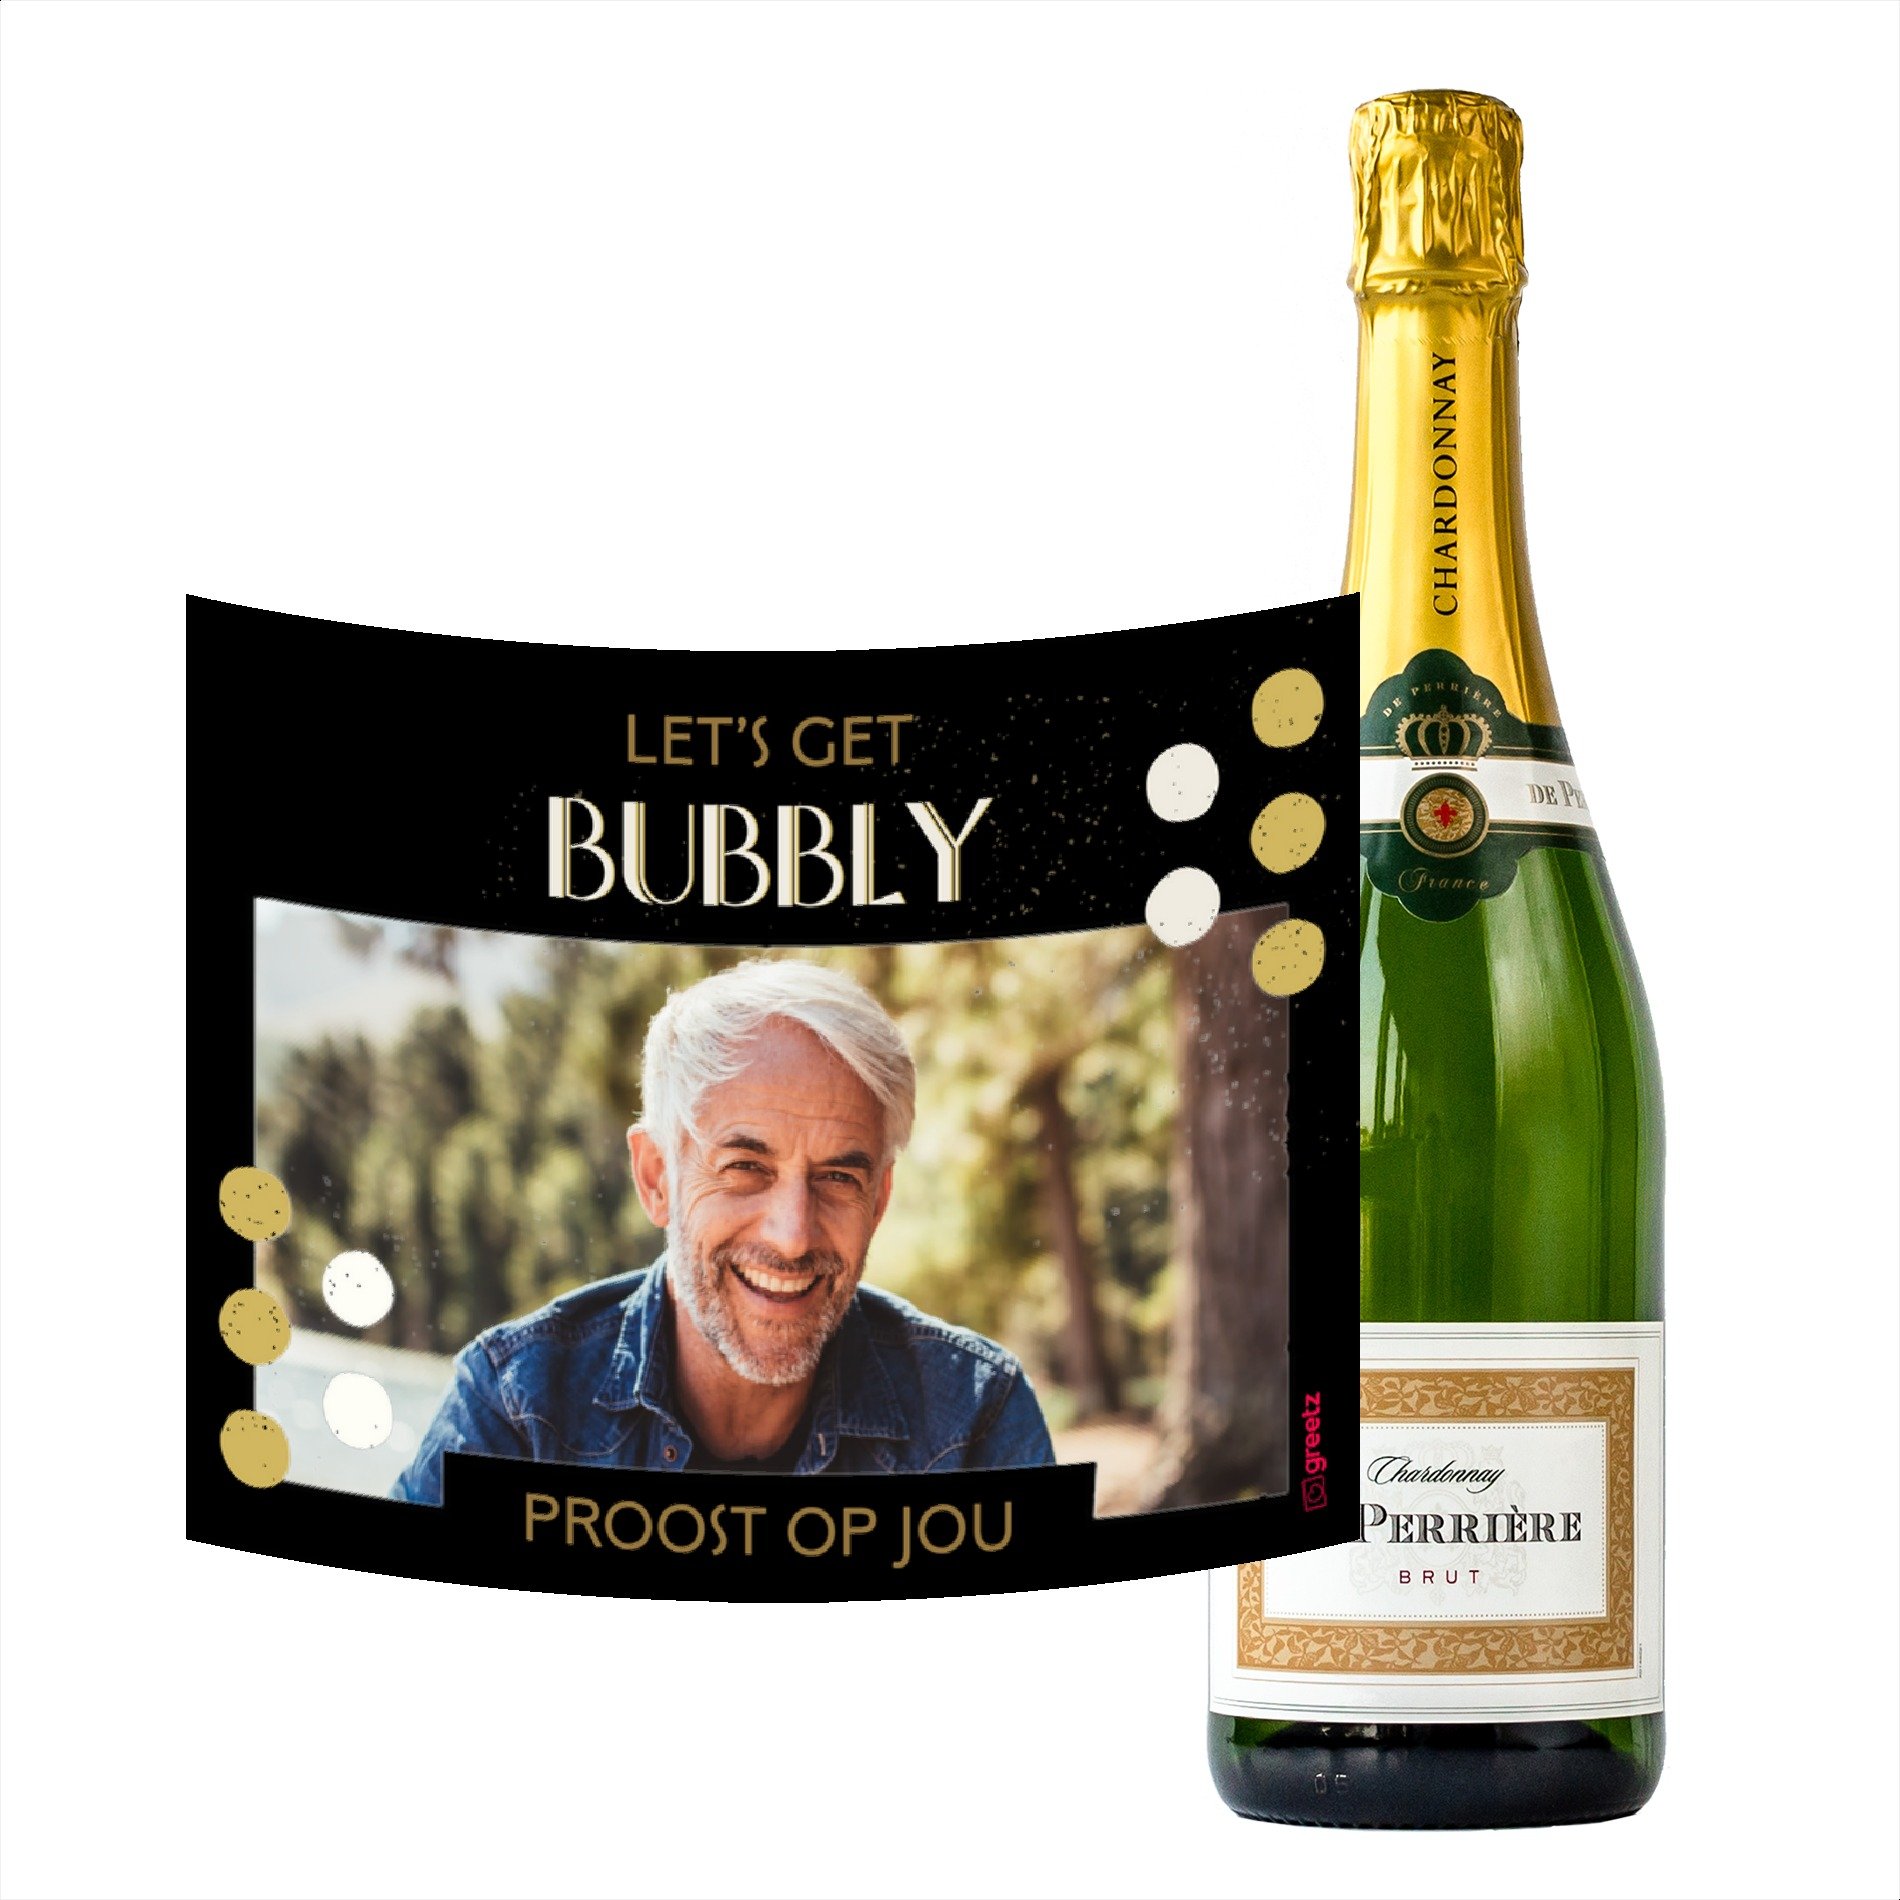 Perriere - Brut Chardonnay - Let's get bubbly met eigen foto - 750ml